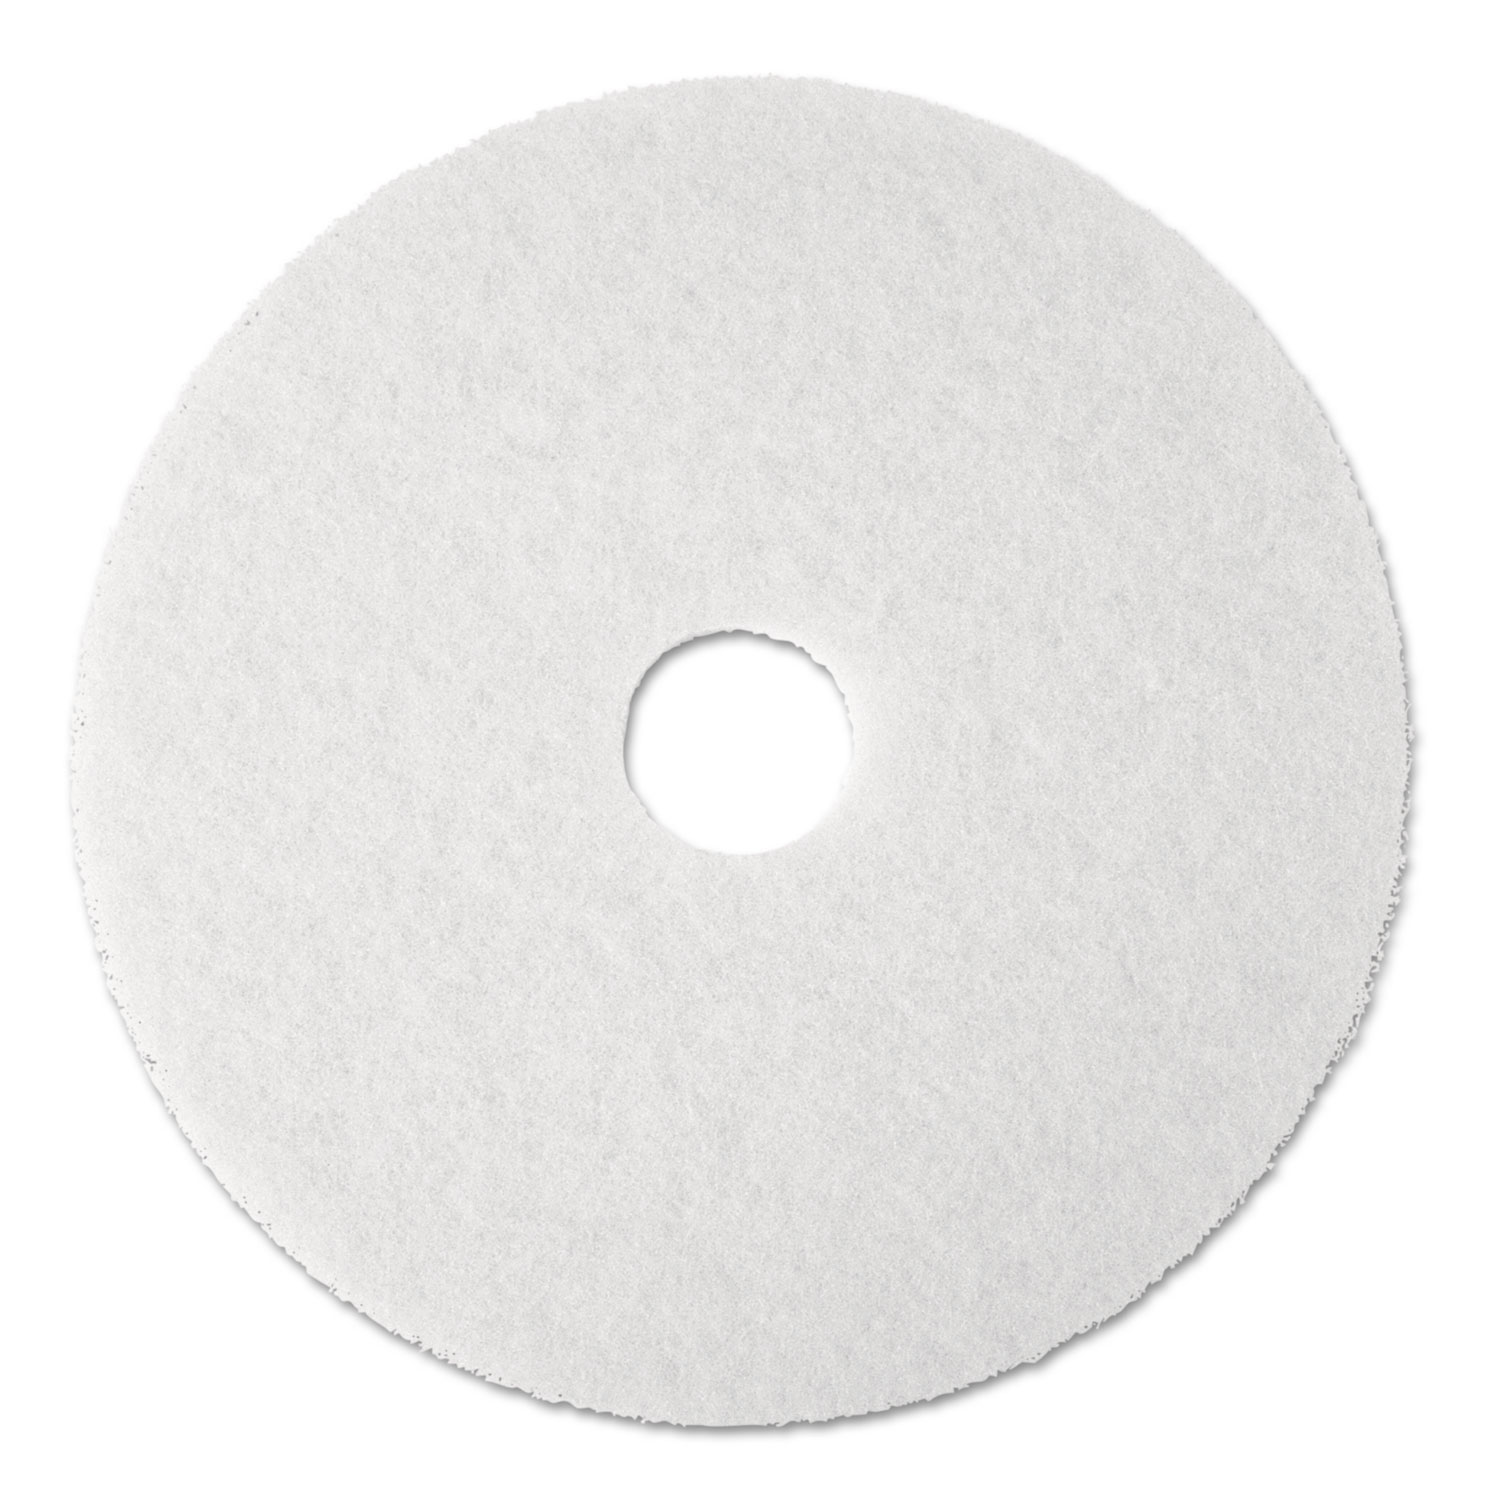  3M 4100 Super Polish Floor Pad 4100, 20 Diameter, White, 5/Carton (MMM08484) 